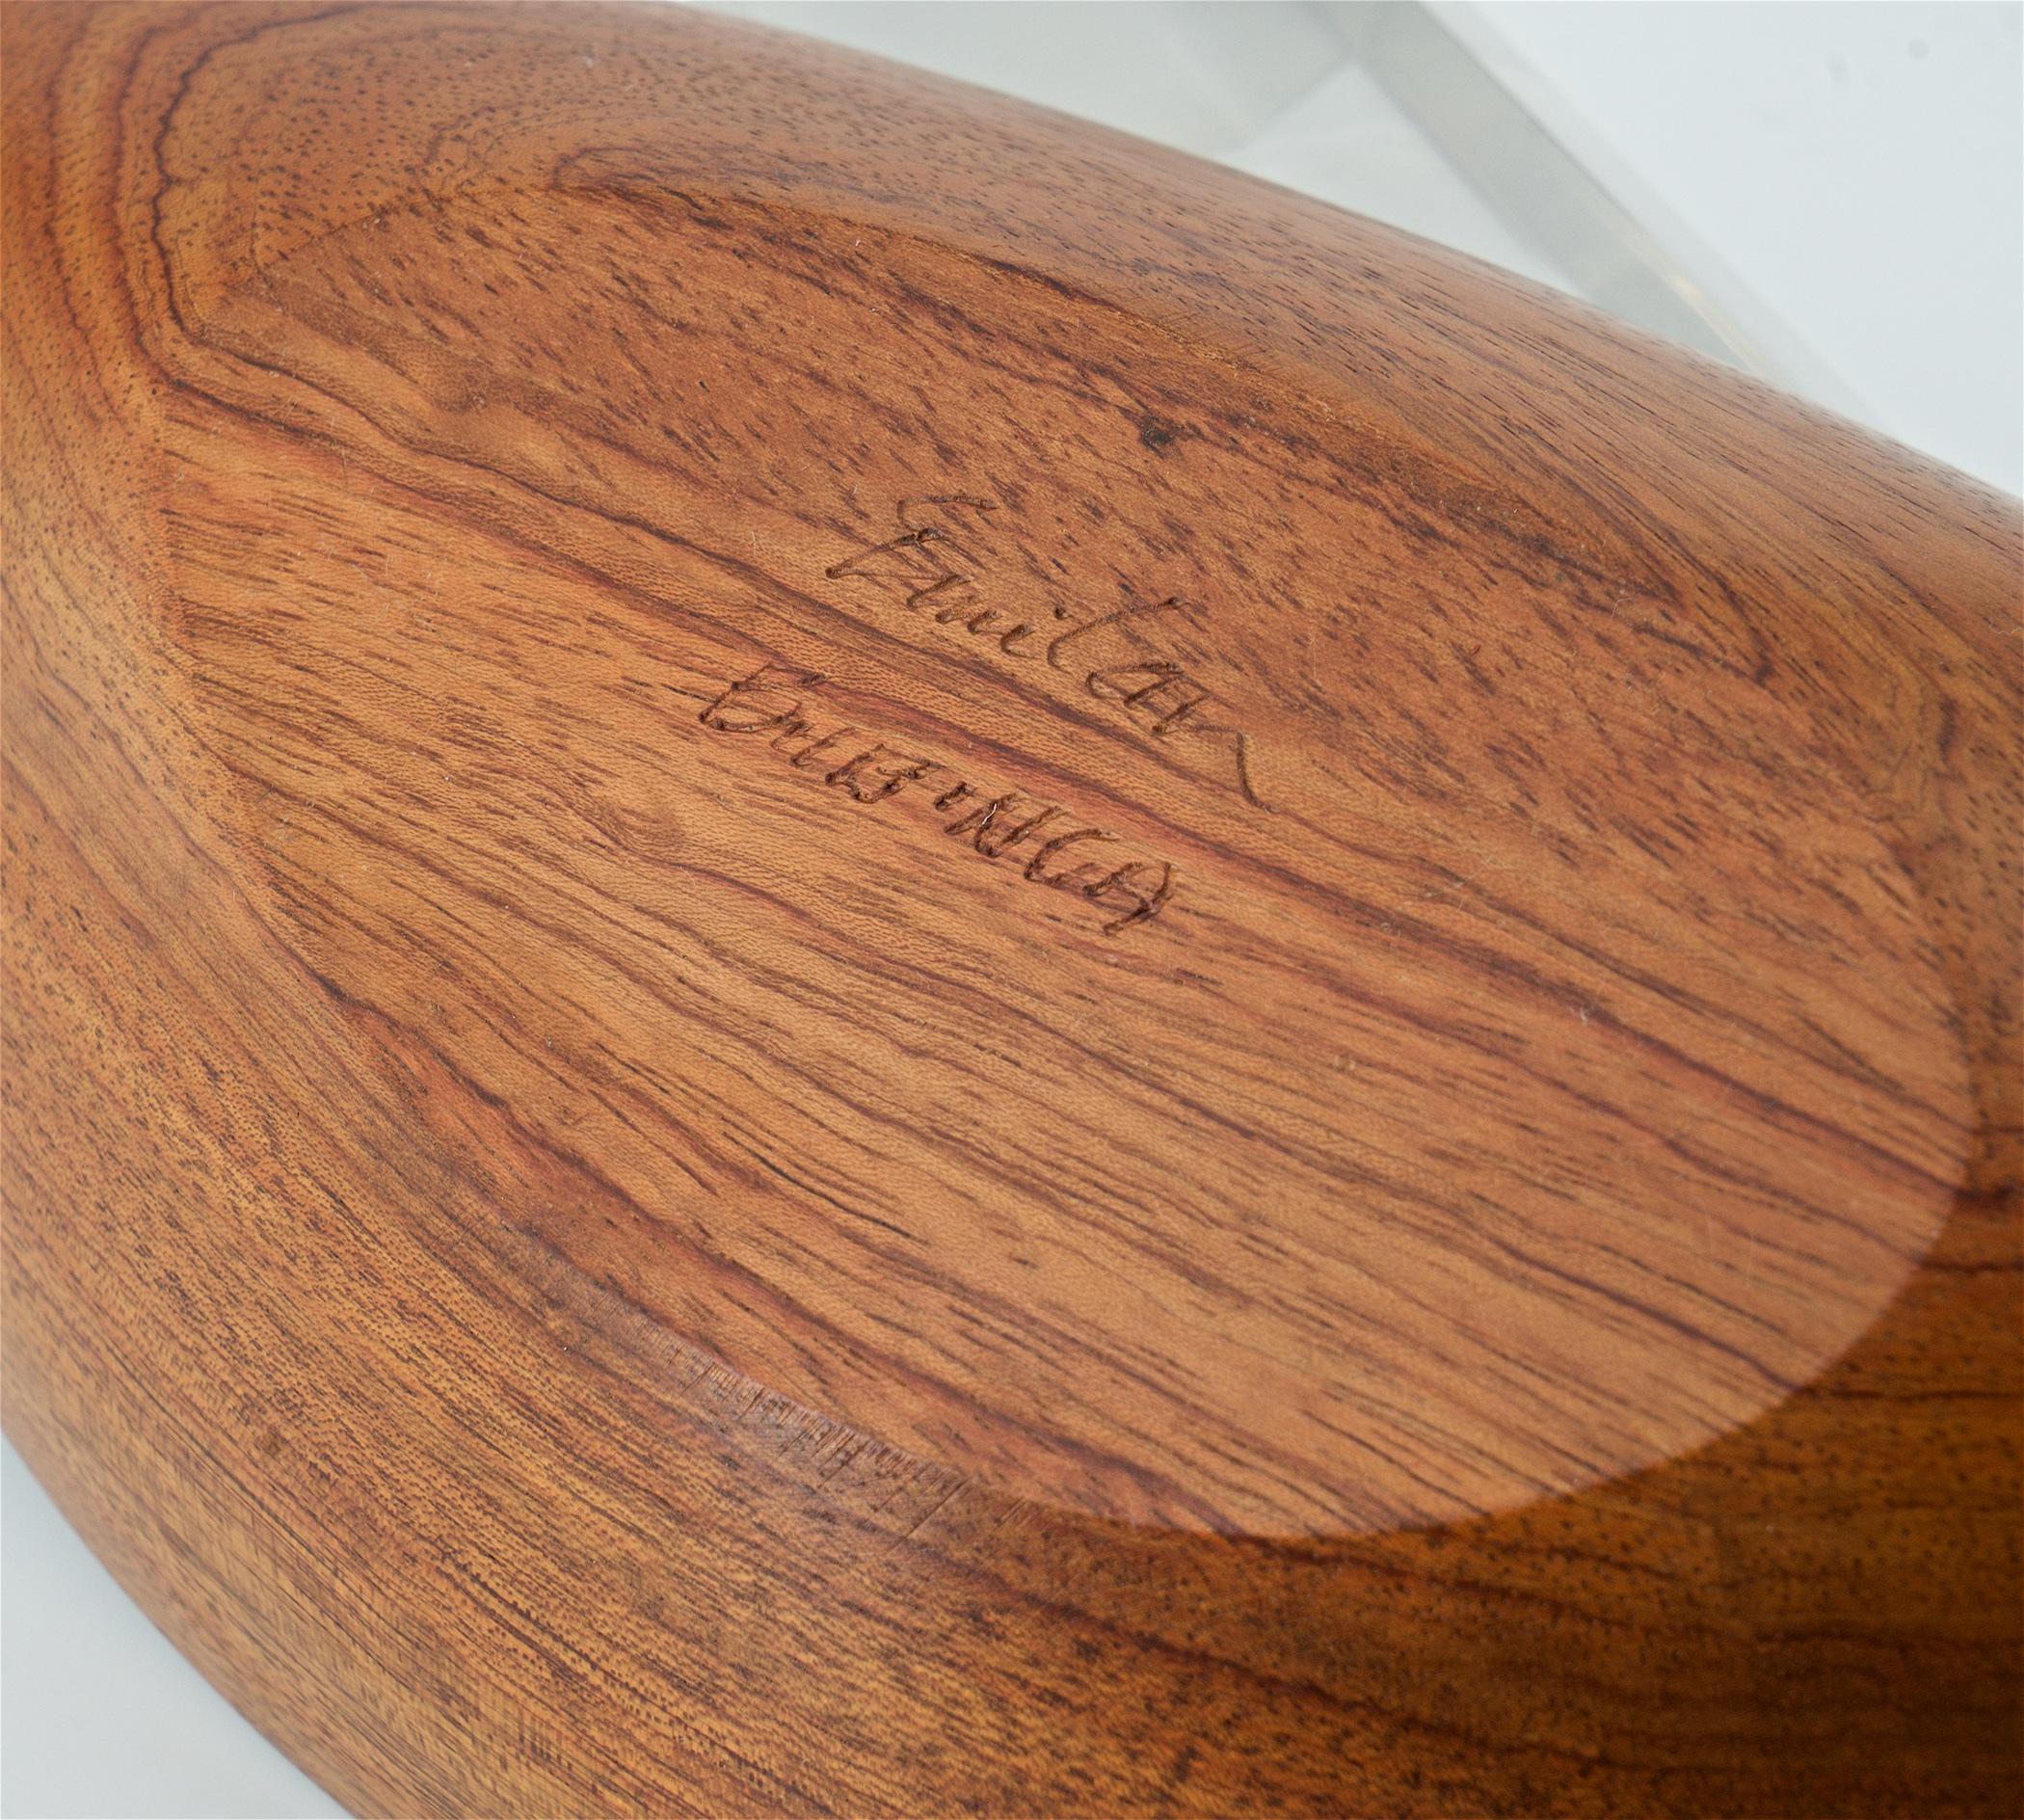 Centerpiece Rare Wood Fruit Bowl Mid 20th Century American Craftsman Design For Sale 3